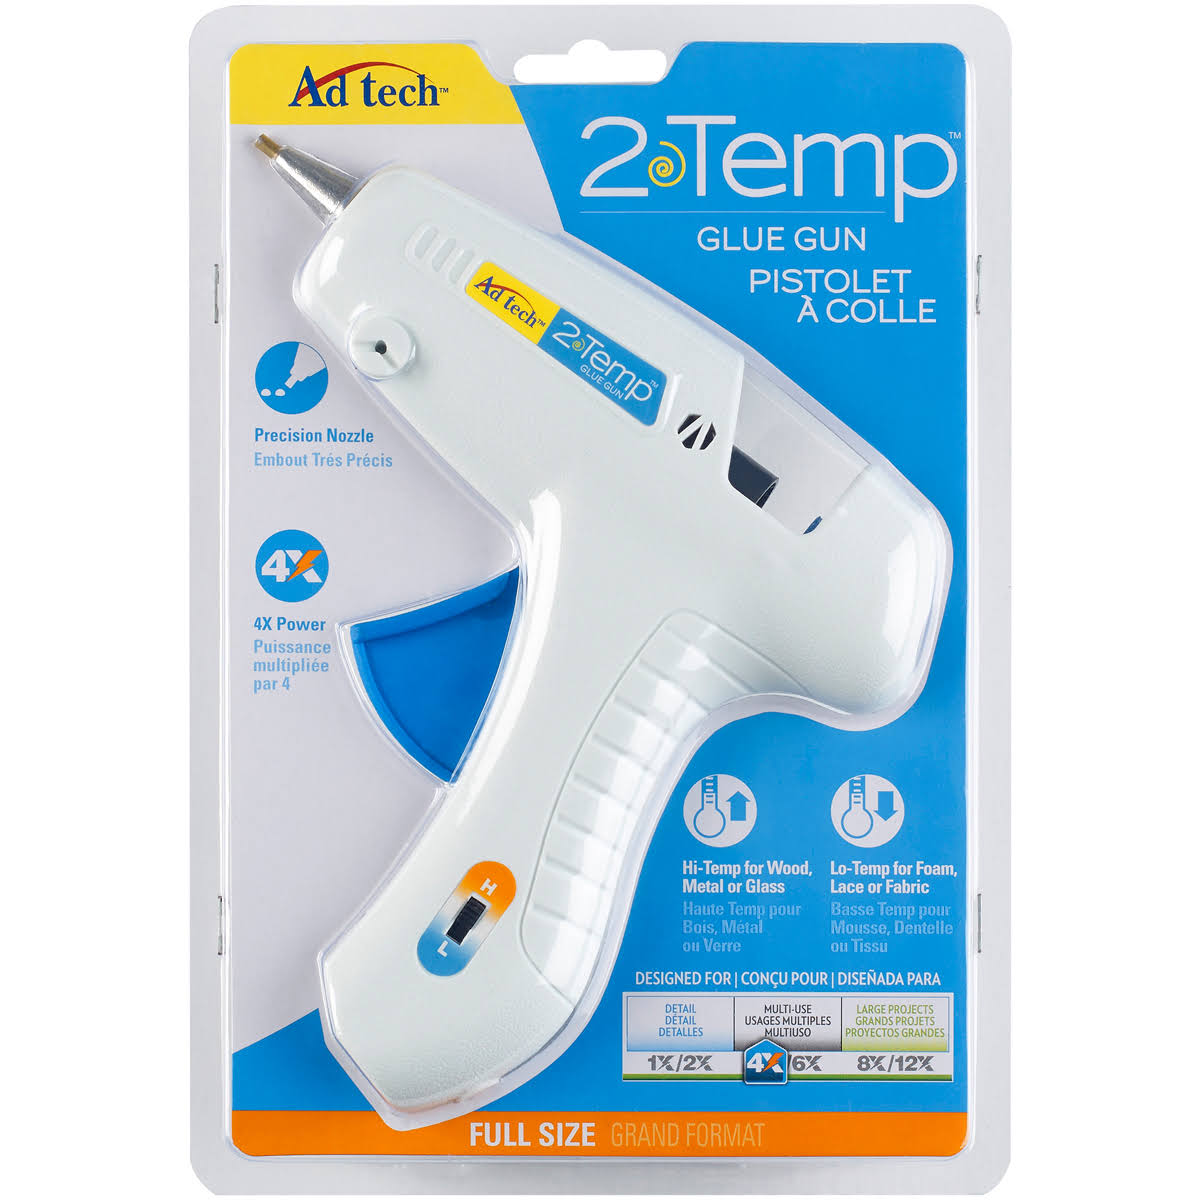 Ad Tech Two-Temperature Cordless Glue Gun